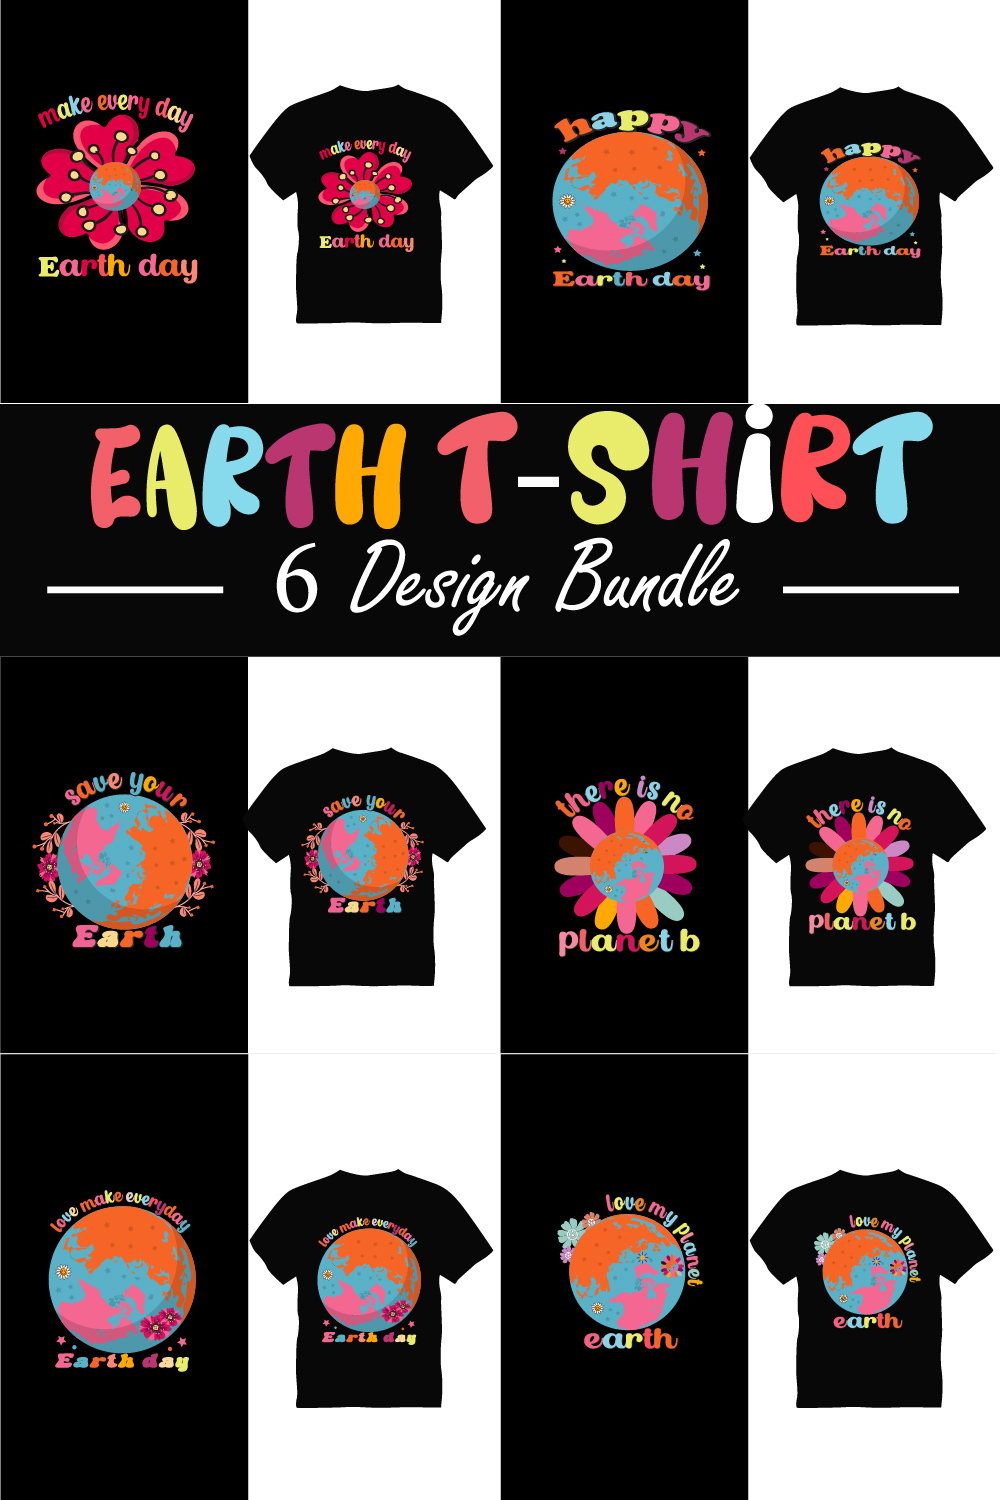 EARTH T-Shirt Design Bundles pinterest preview image.